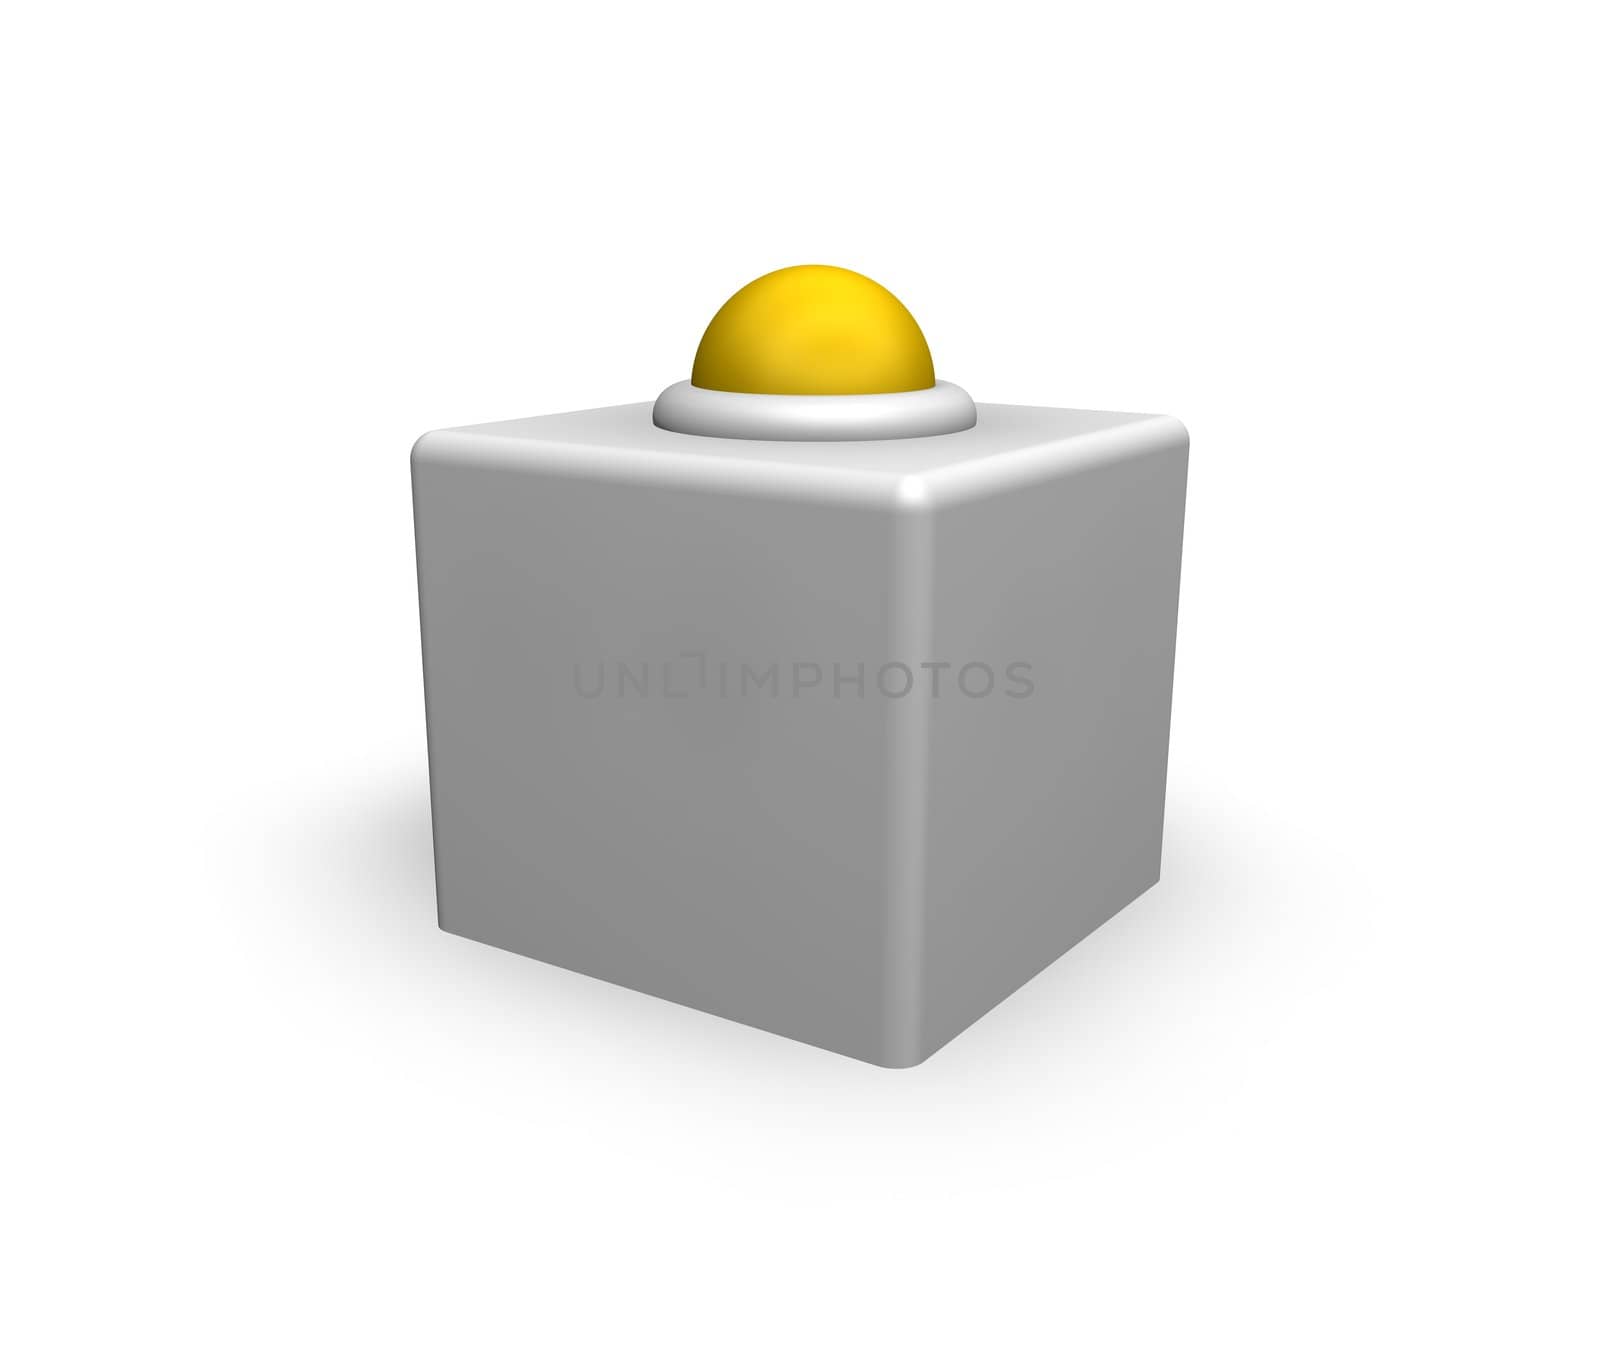 yellow alert button on white background - 3d illustration